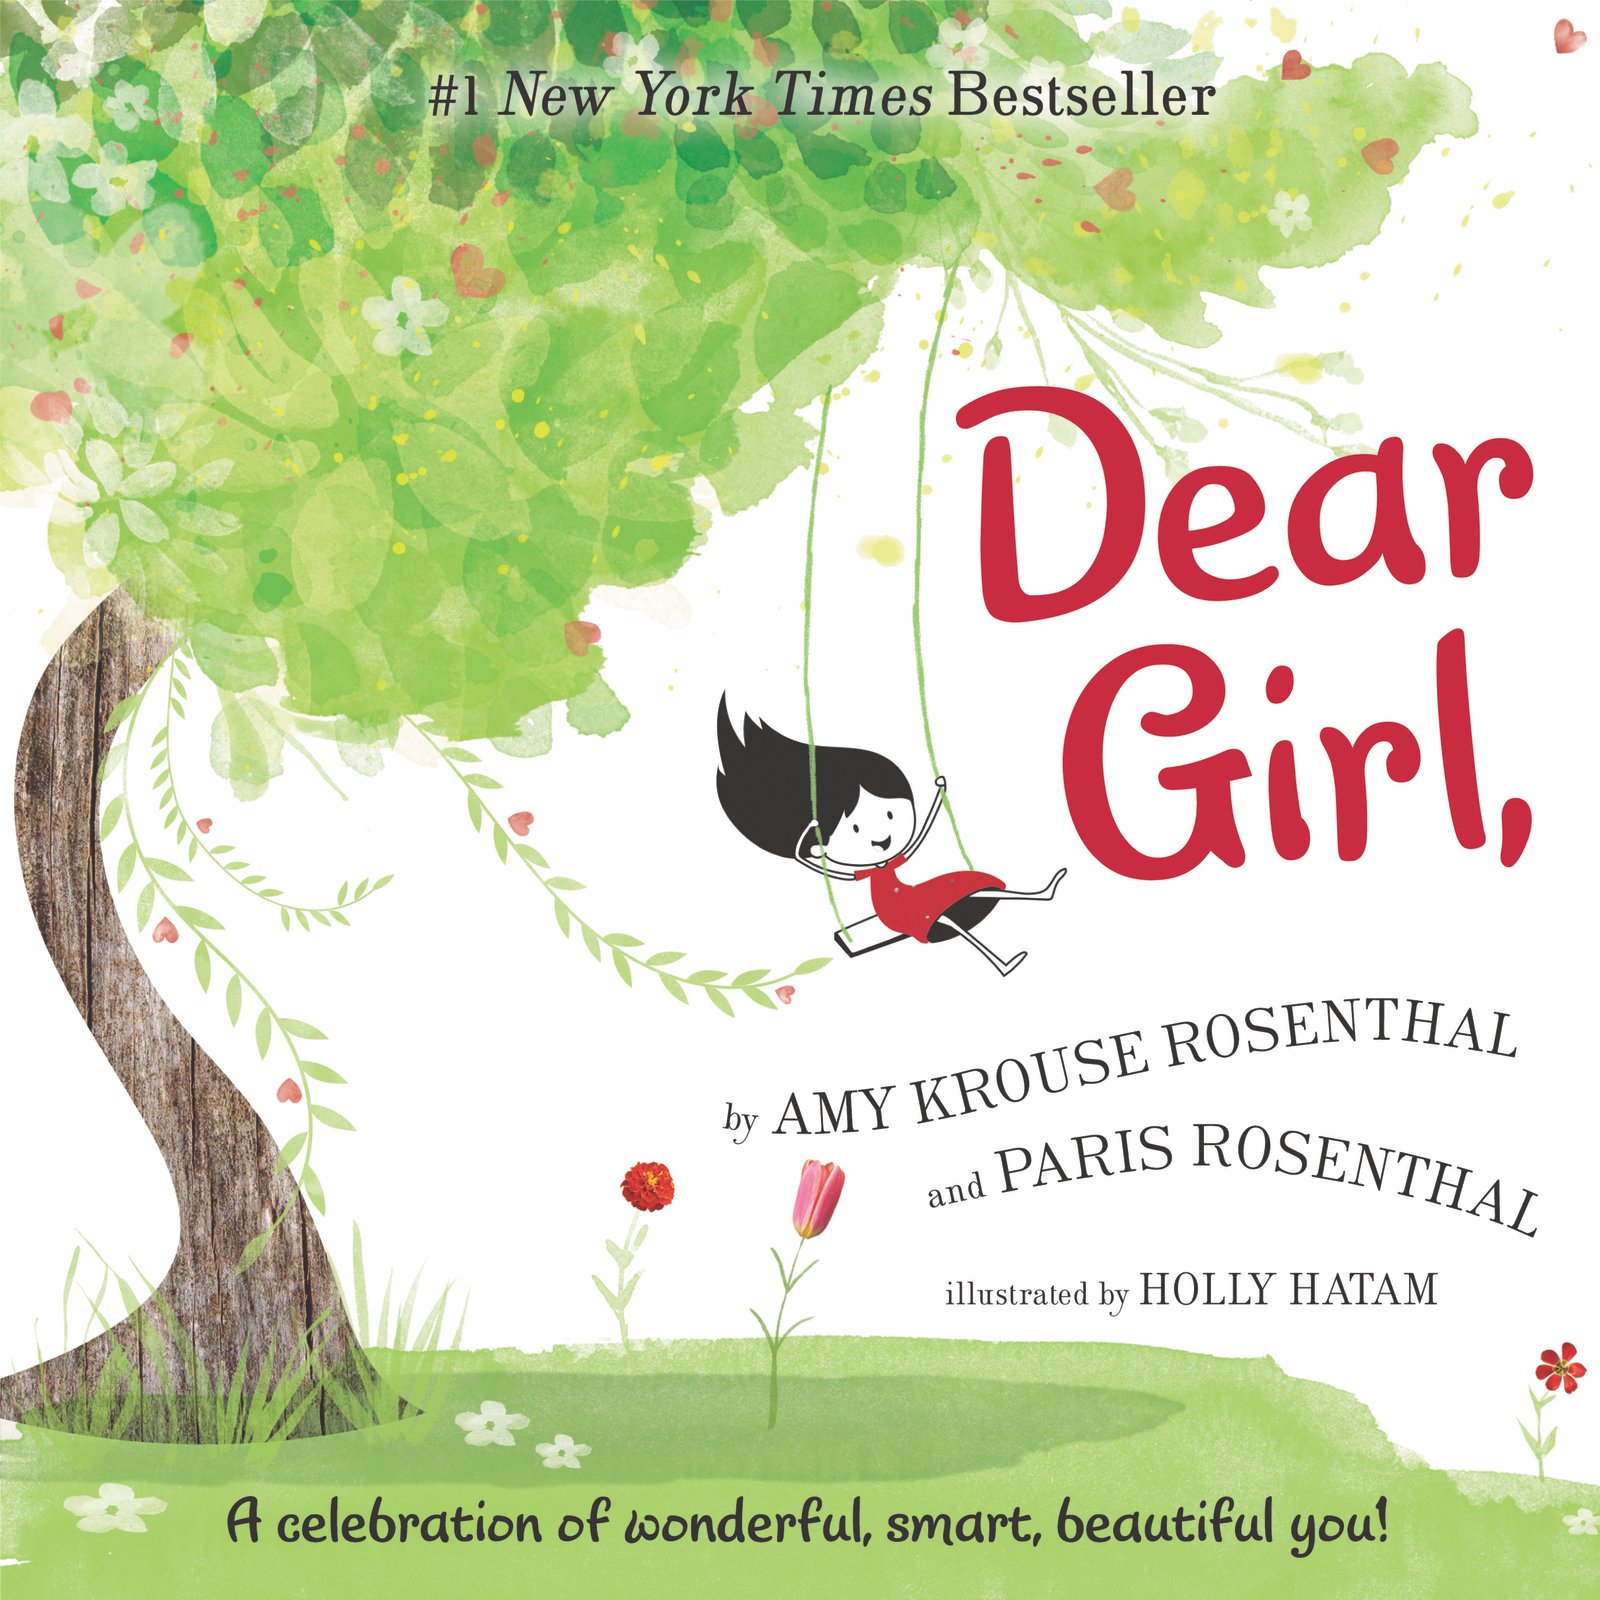 photo of the book "dear girl"